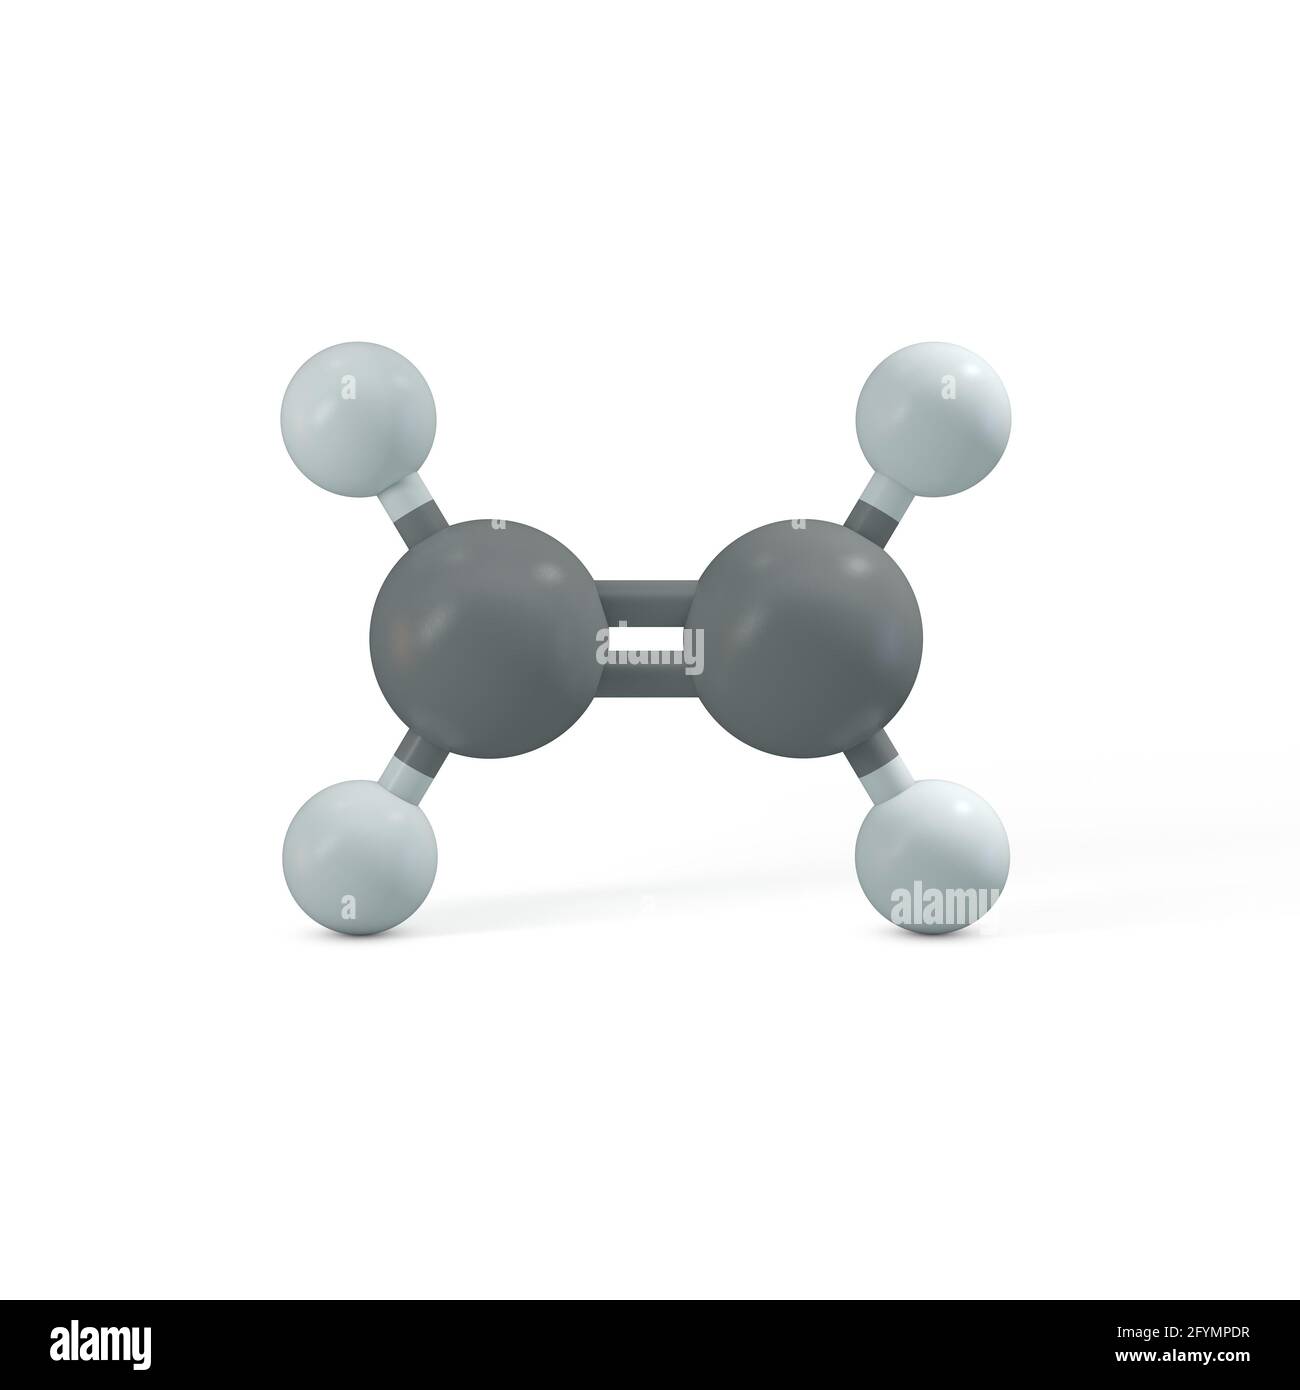 Ethene molecule, illustration Stock Photo - Alamy